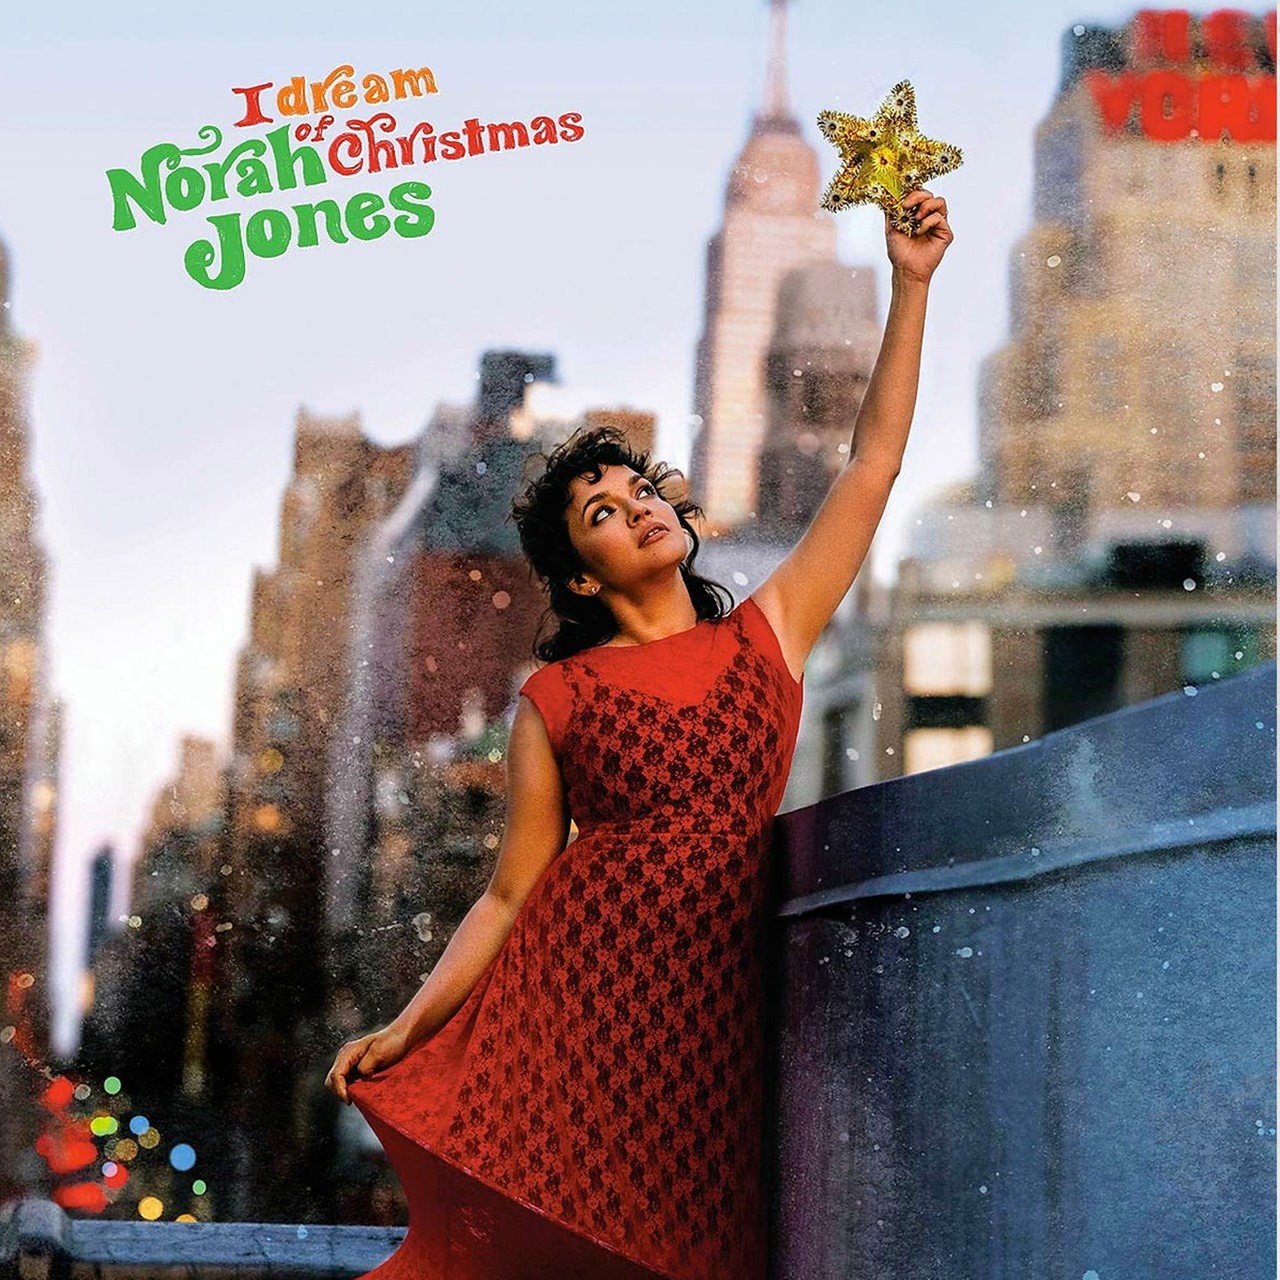 Albumcover von Norah Jones "I Dream Of Christmas".